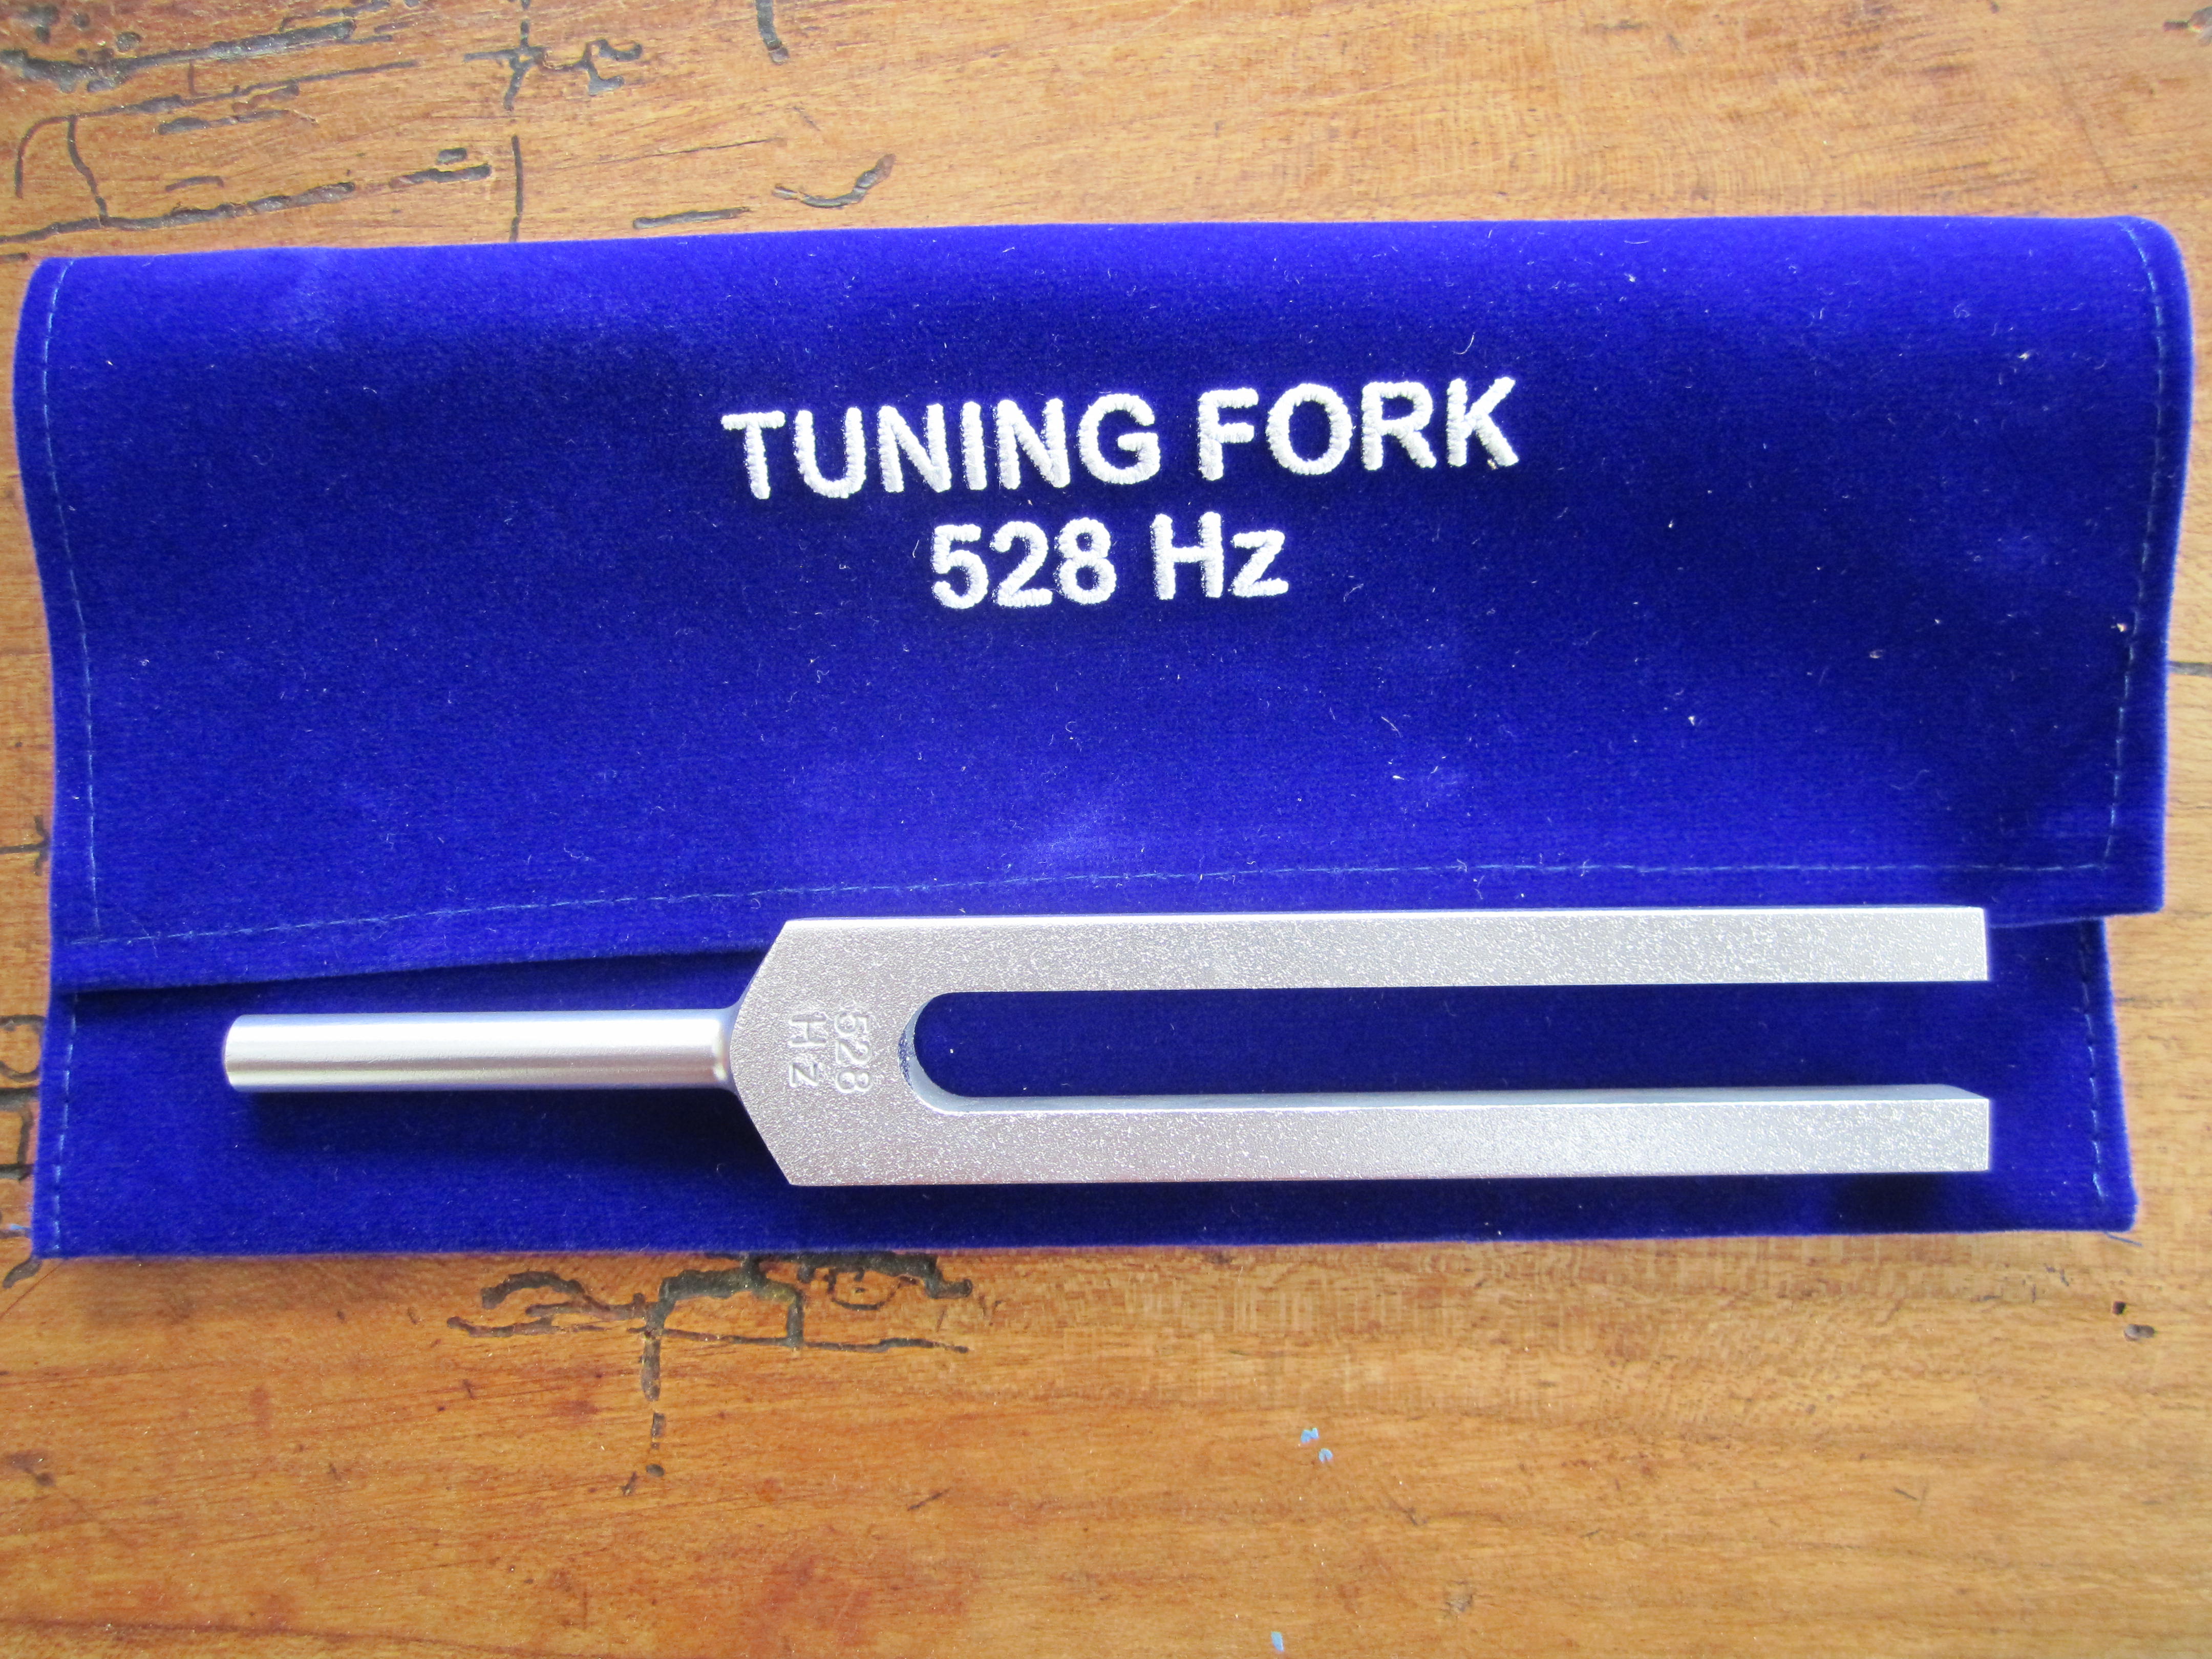 256 hz tuning fork